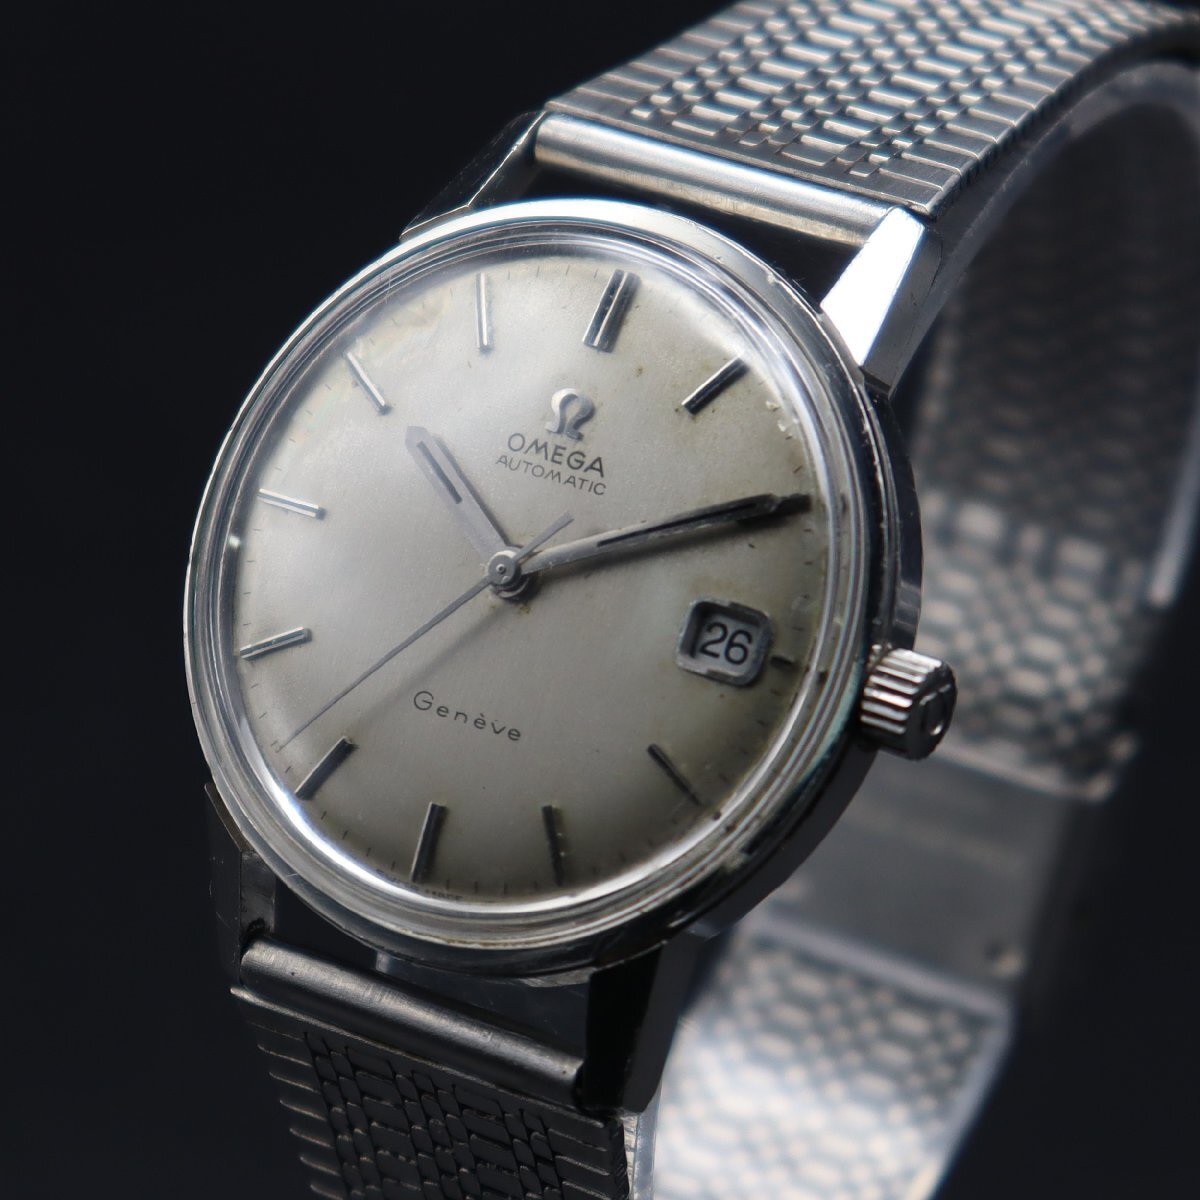 OMEGA GENEVE オメガ ジュネーブ Ref.166.037 Cal.565 自動巻き 1970年頃製造 デイト スイス製 アンティーク メンズ腕時計_画像1